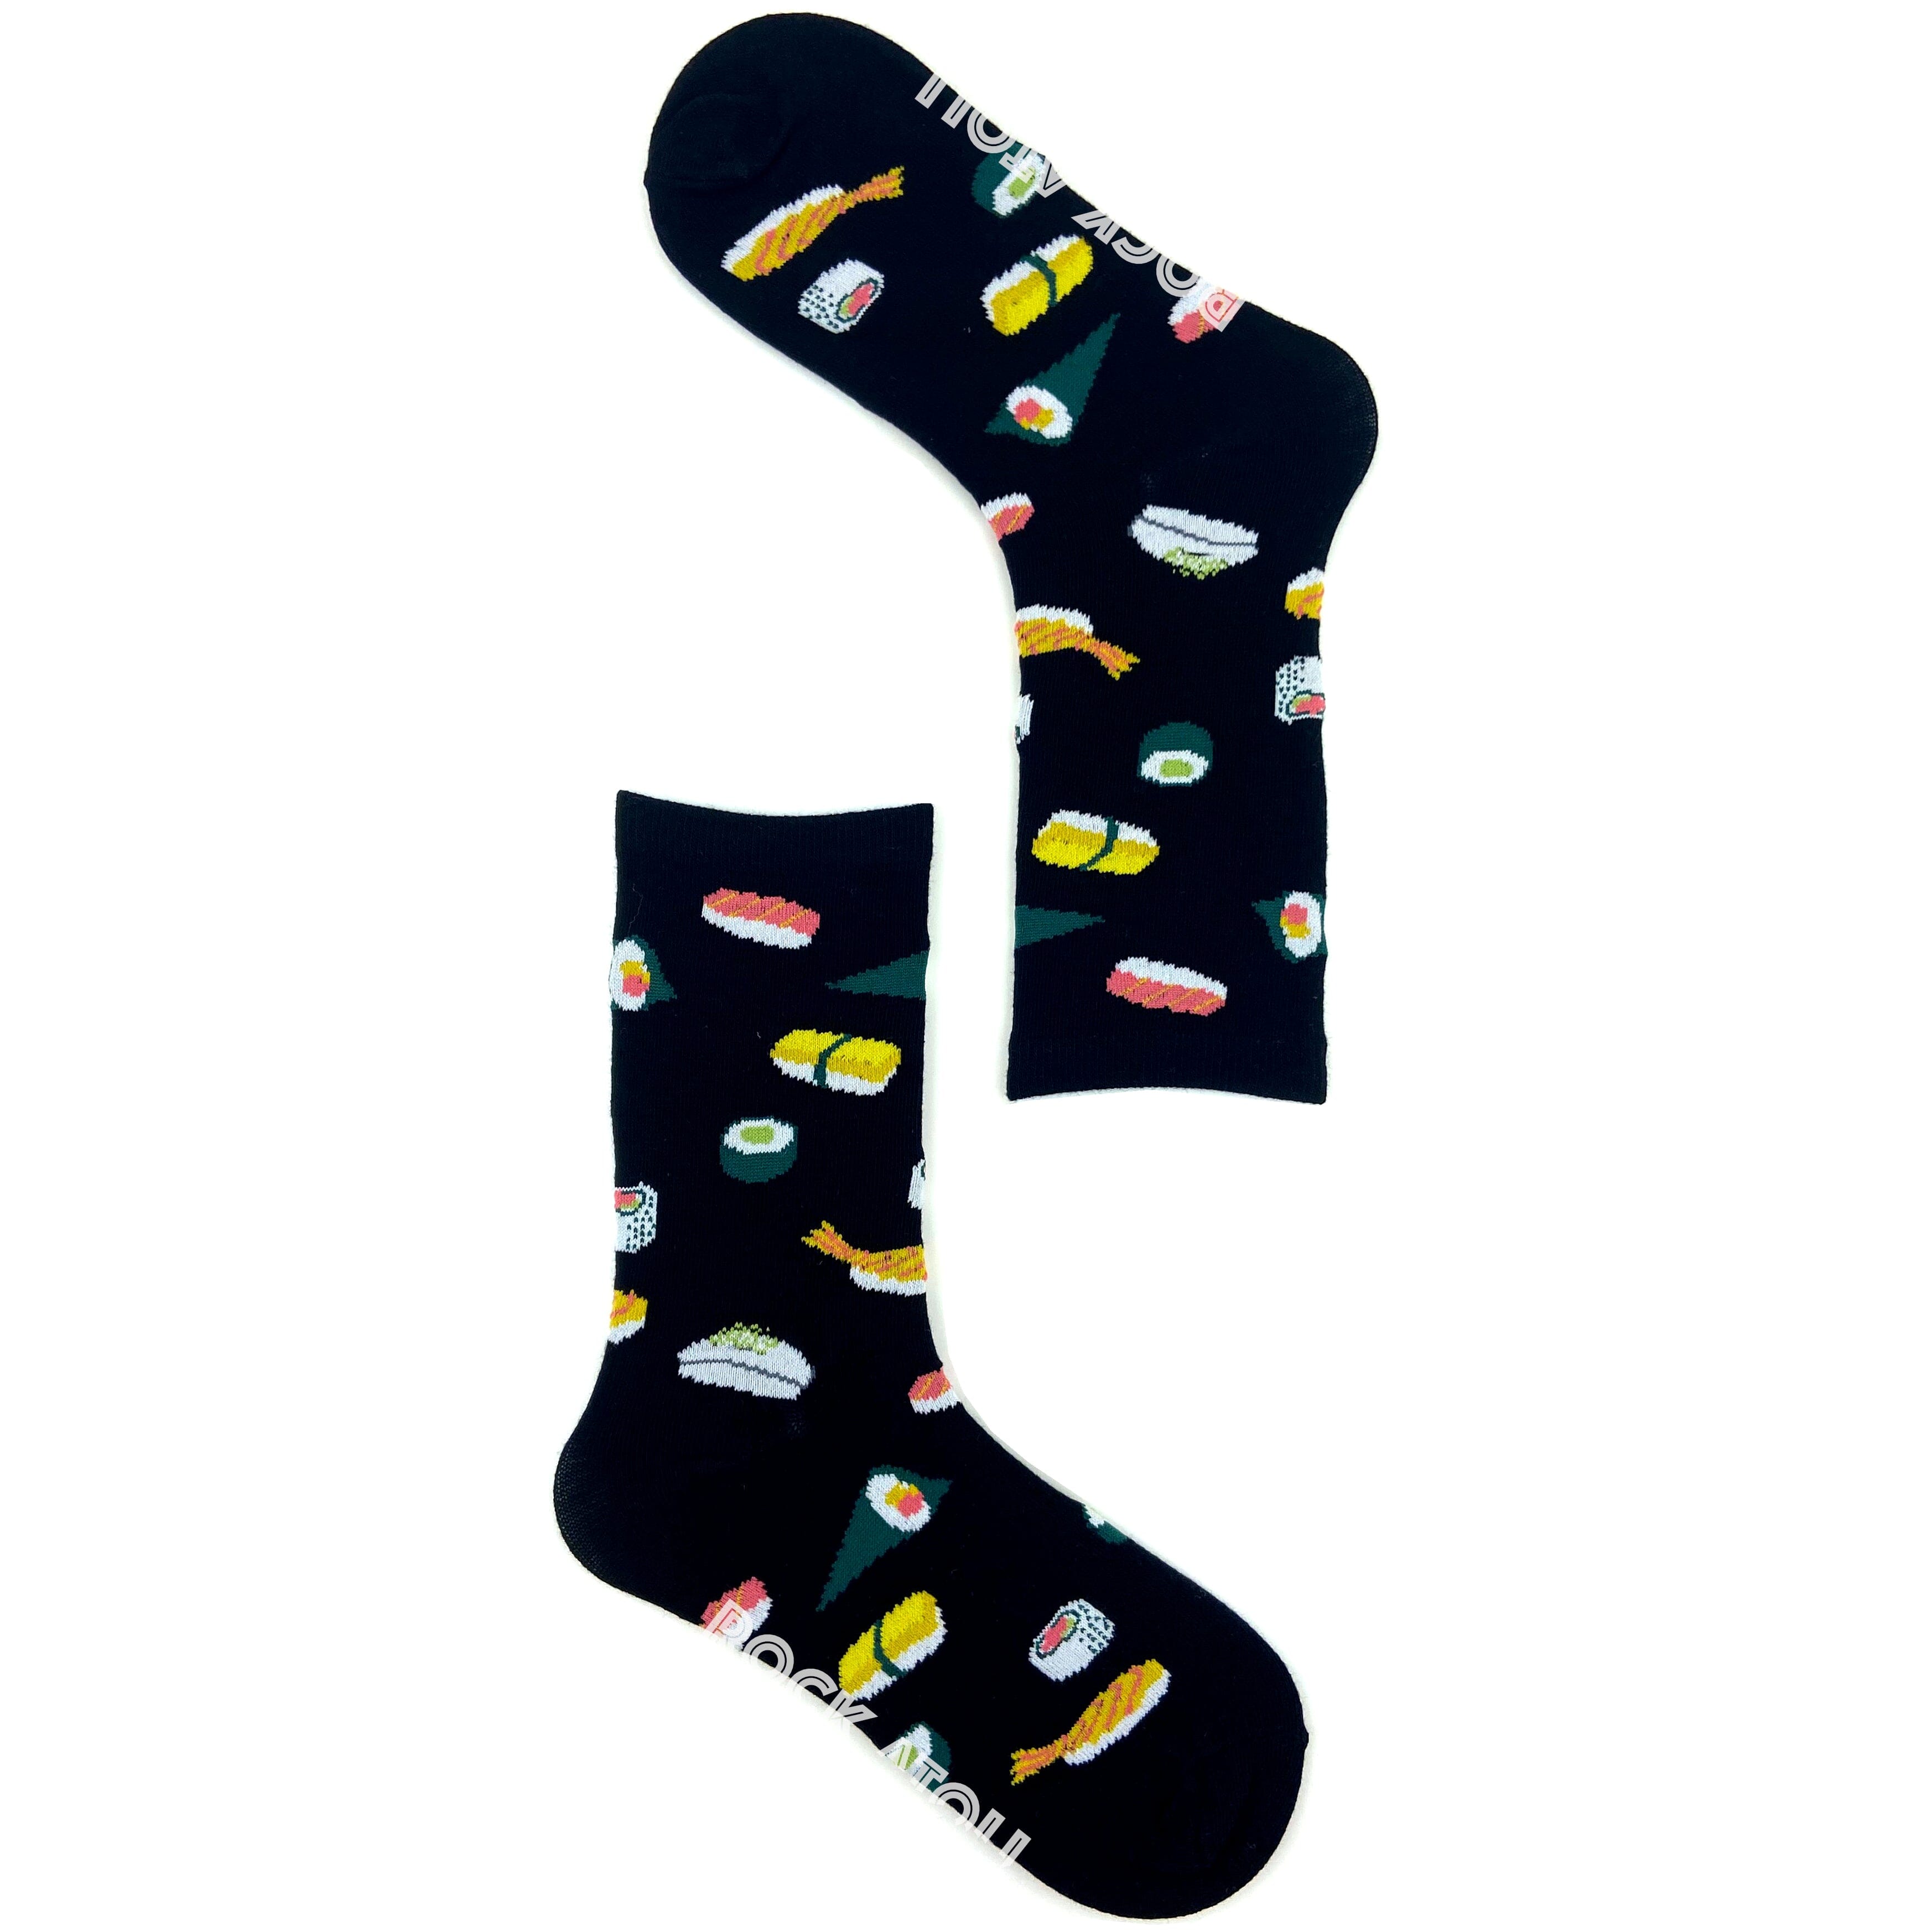 Food Inspired Yummy Sushi Patterned Novelty Socks for Women in Black